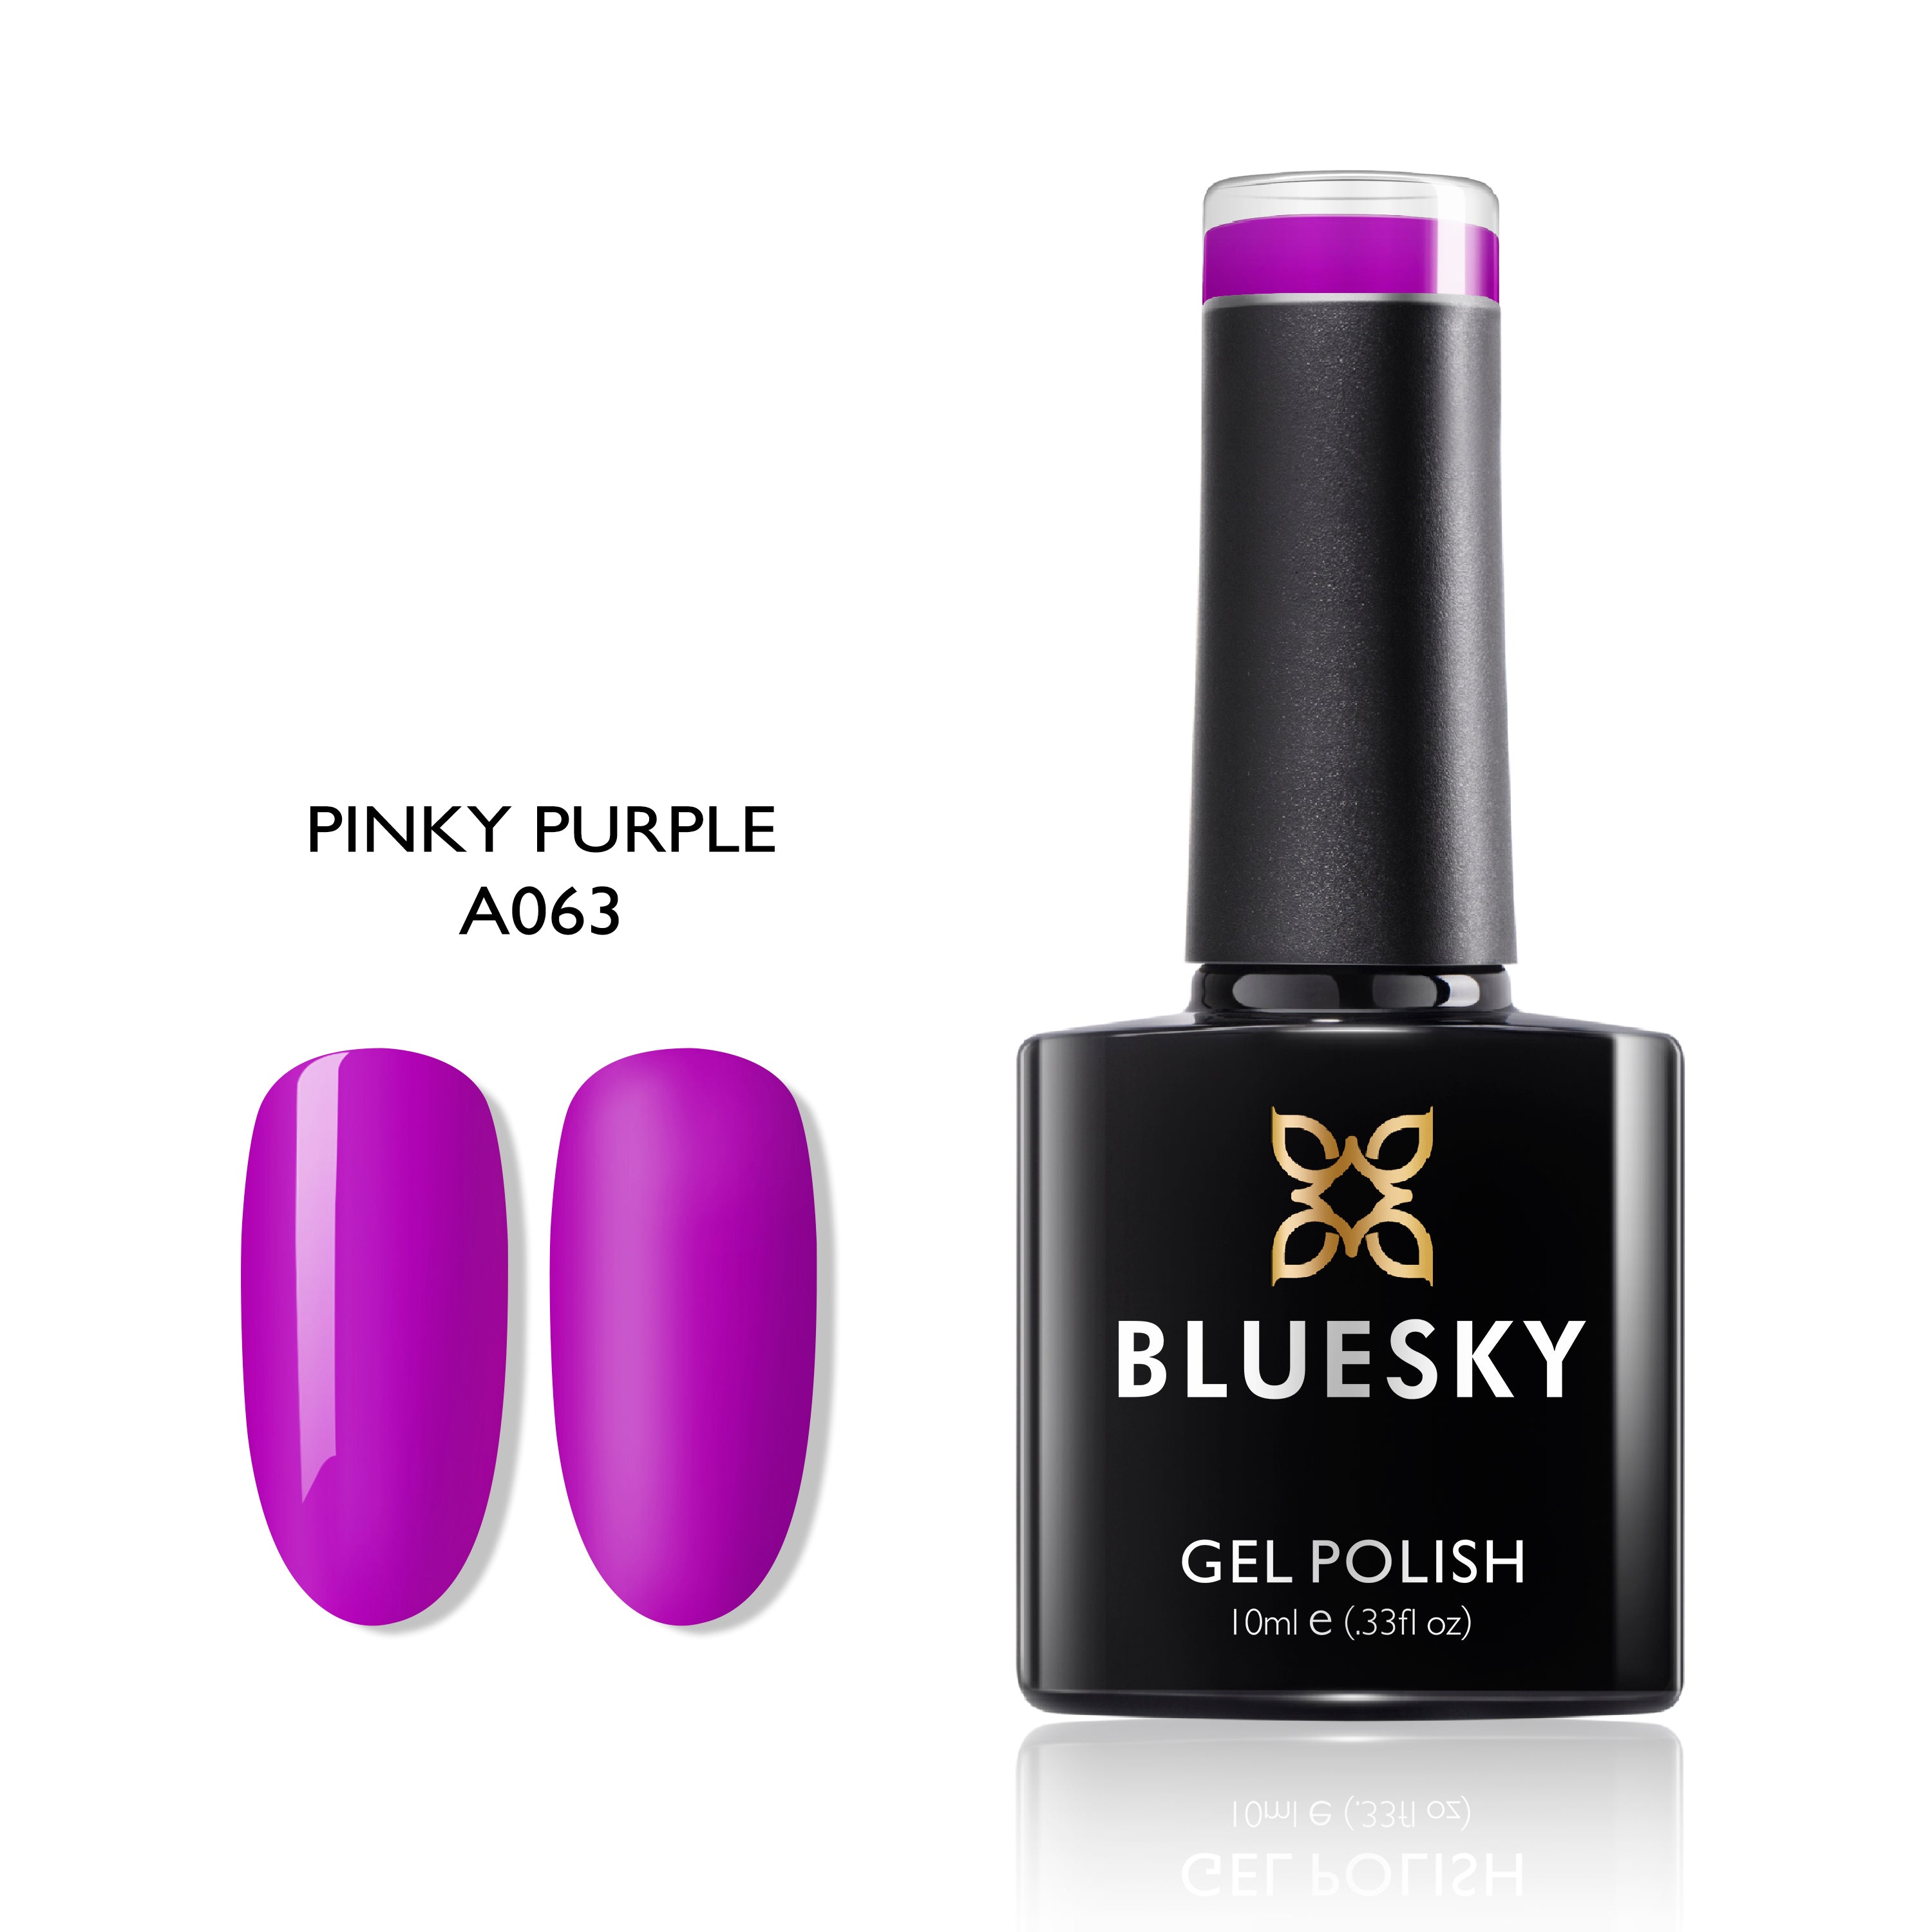 Pinky Purple | 10ml Gel Polish - BLUESKY